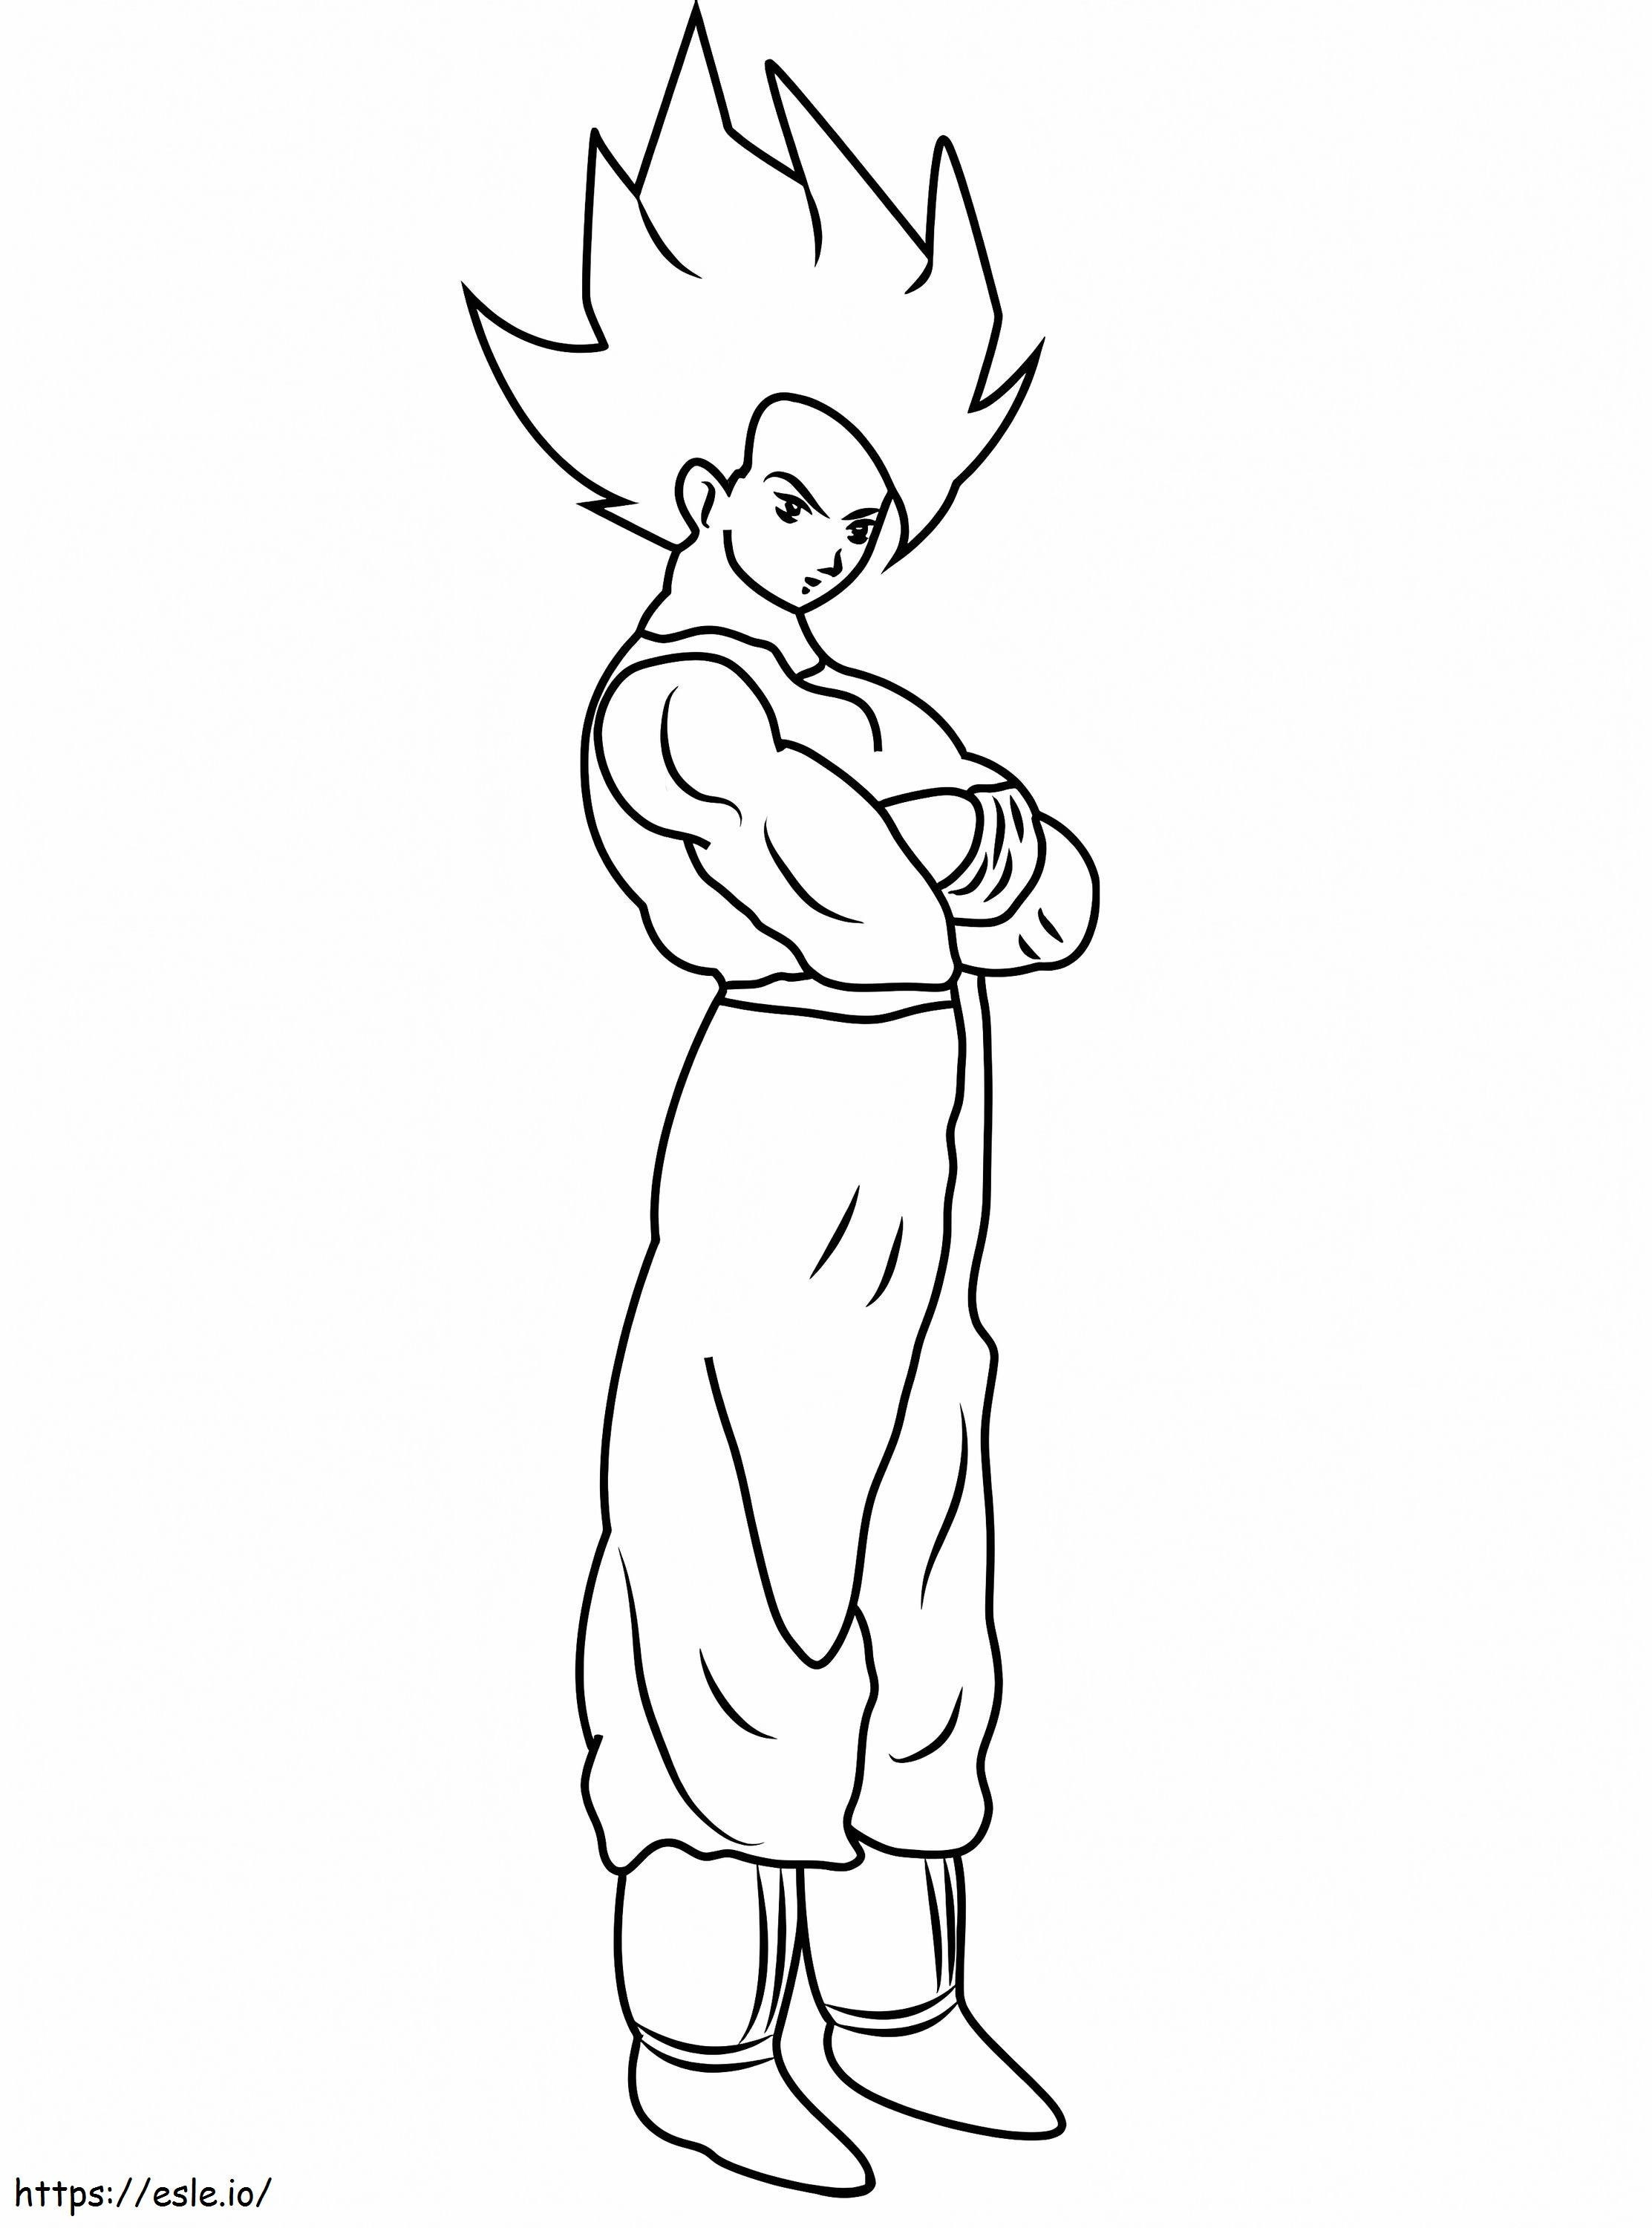 Easy Son Goku coloring page